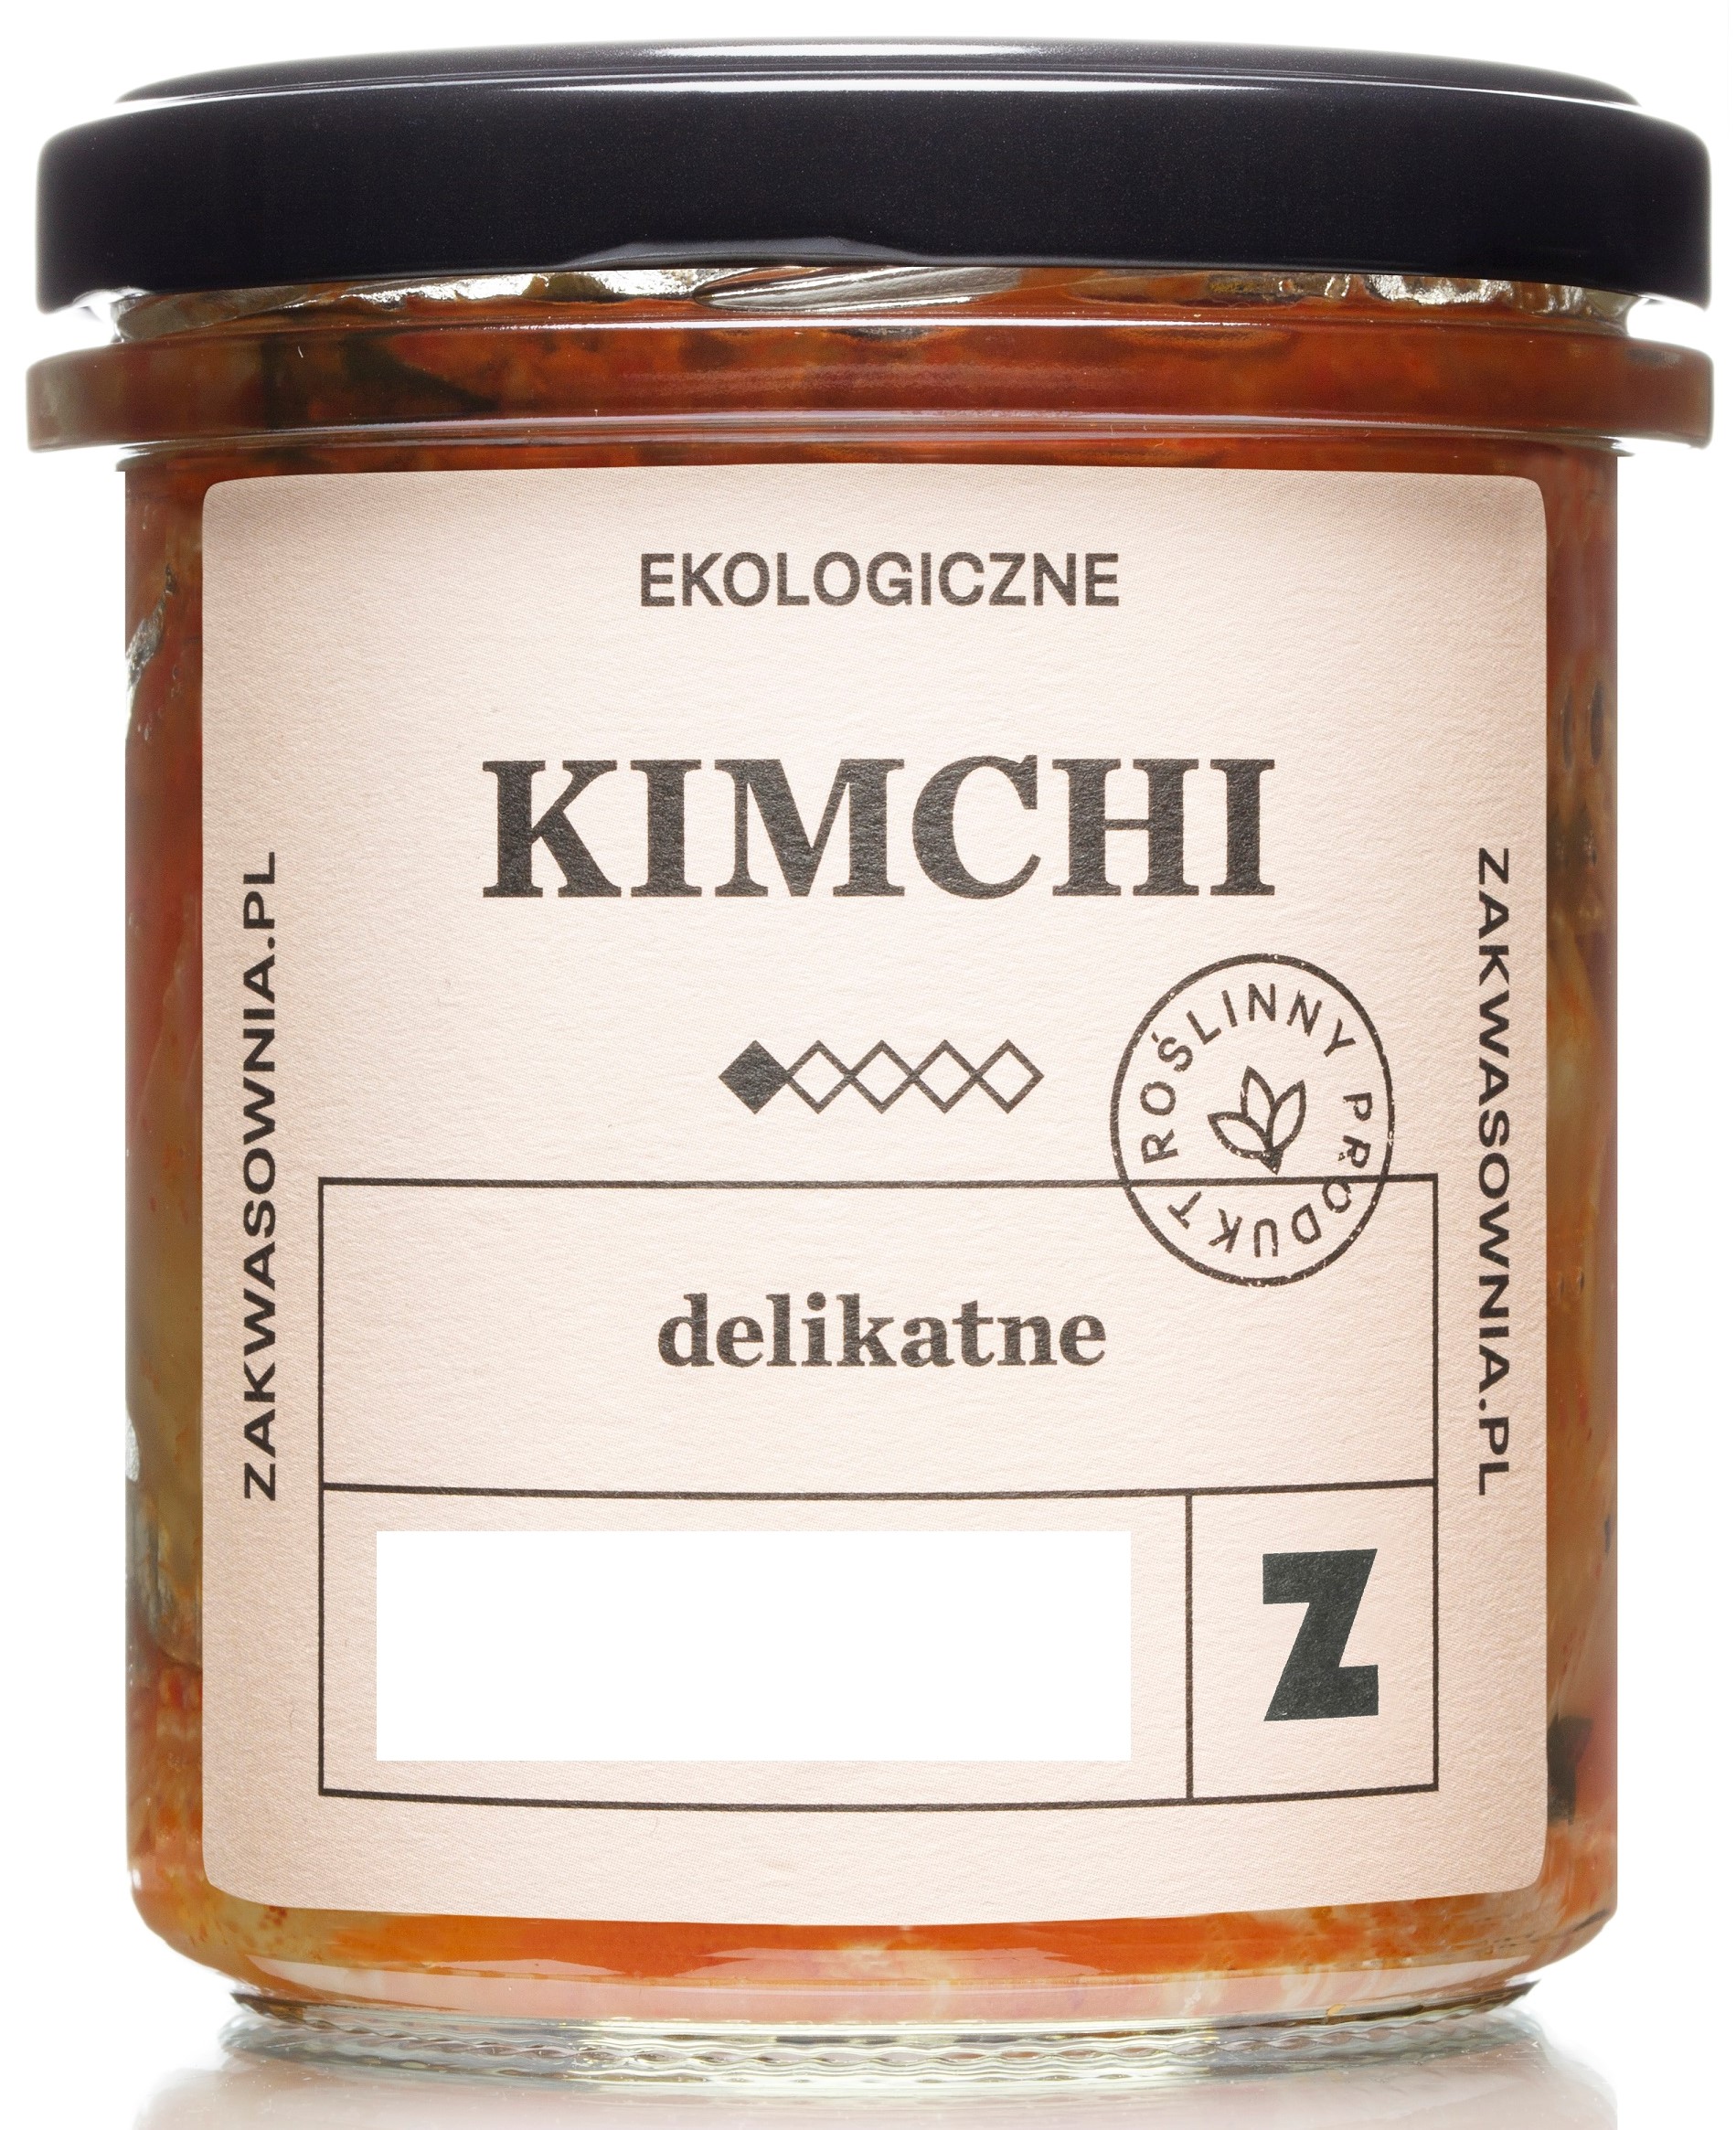 Kimchi sourdough delicate, ecological